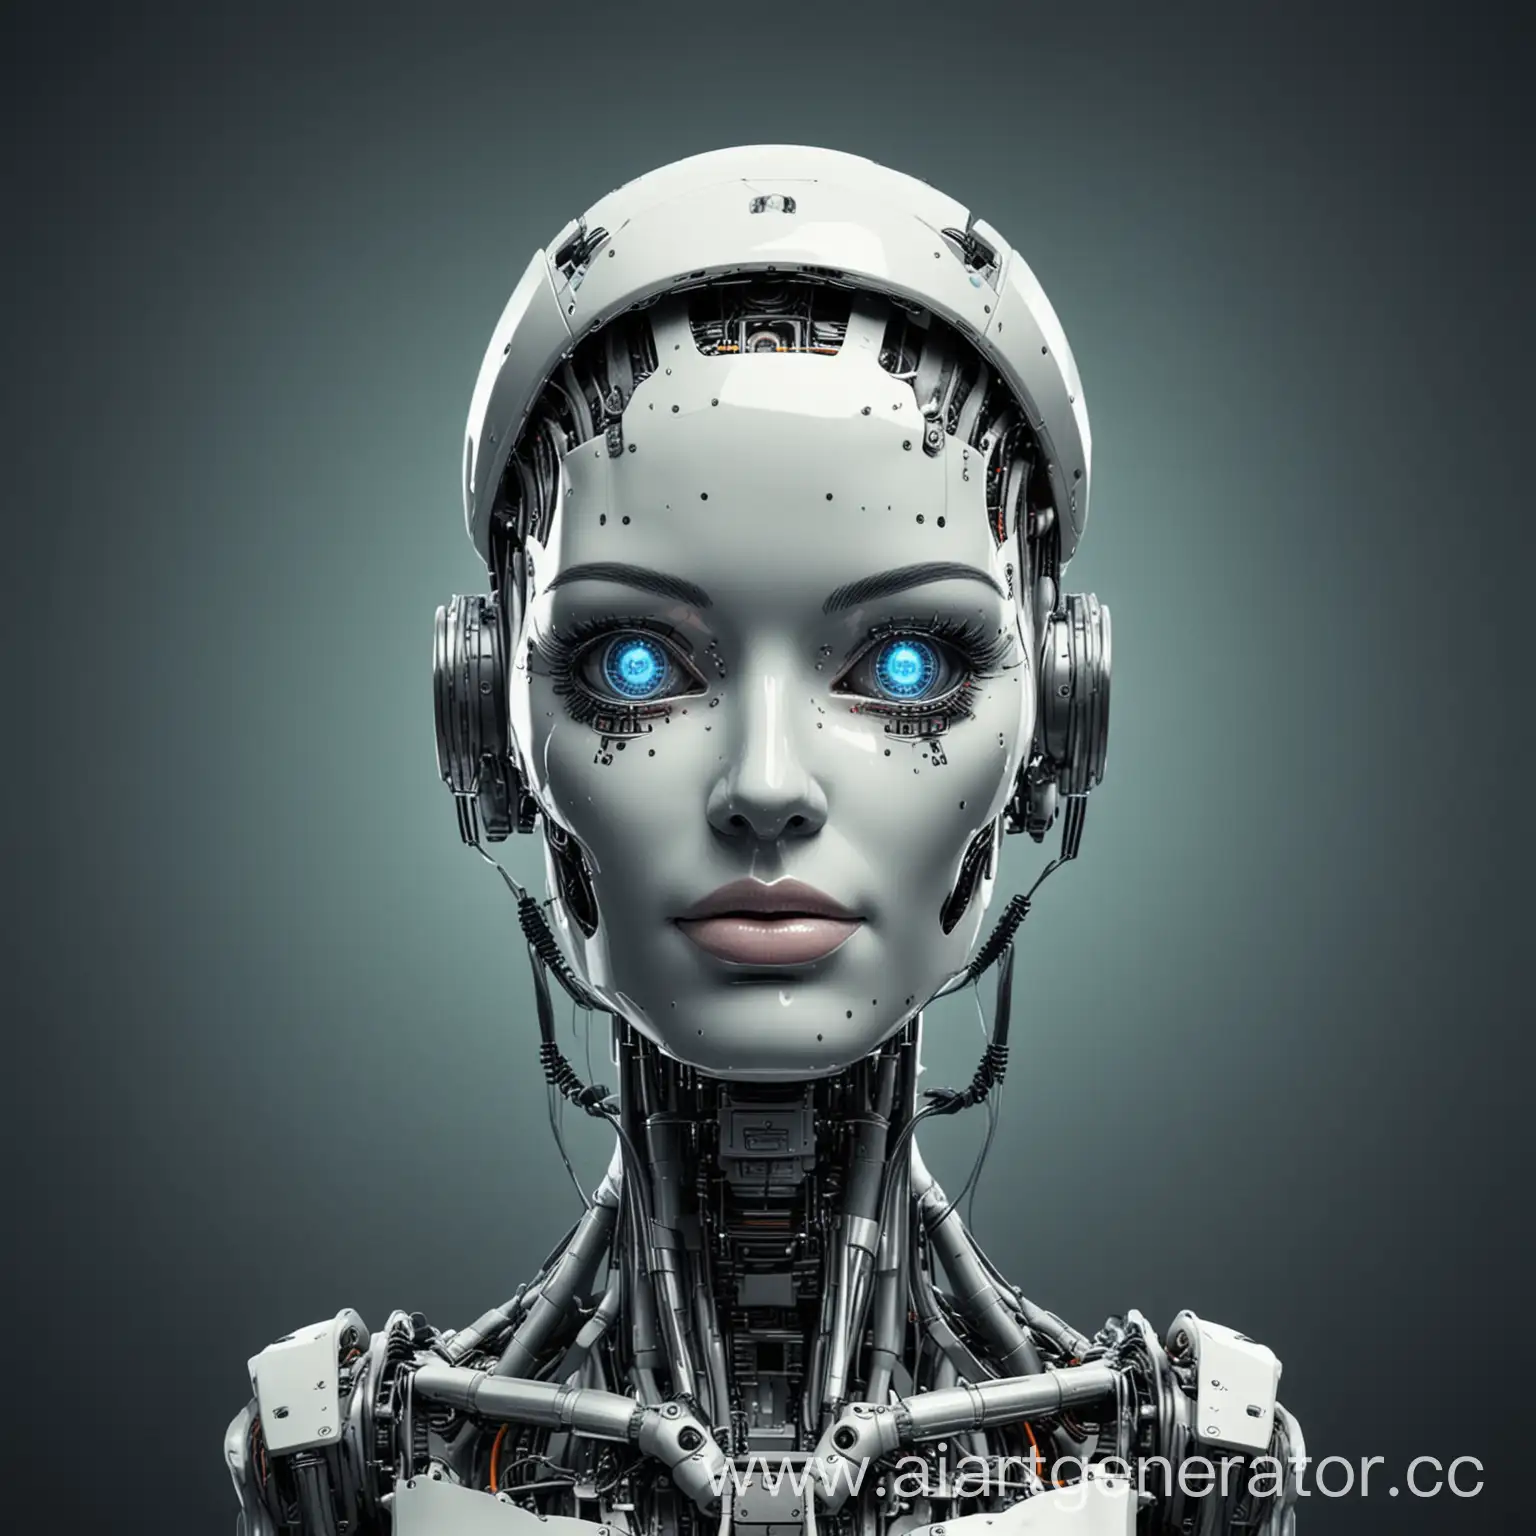 Futuristic-Robot-Symbolizing-Artificial-Intelligence-Innovation